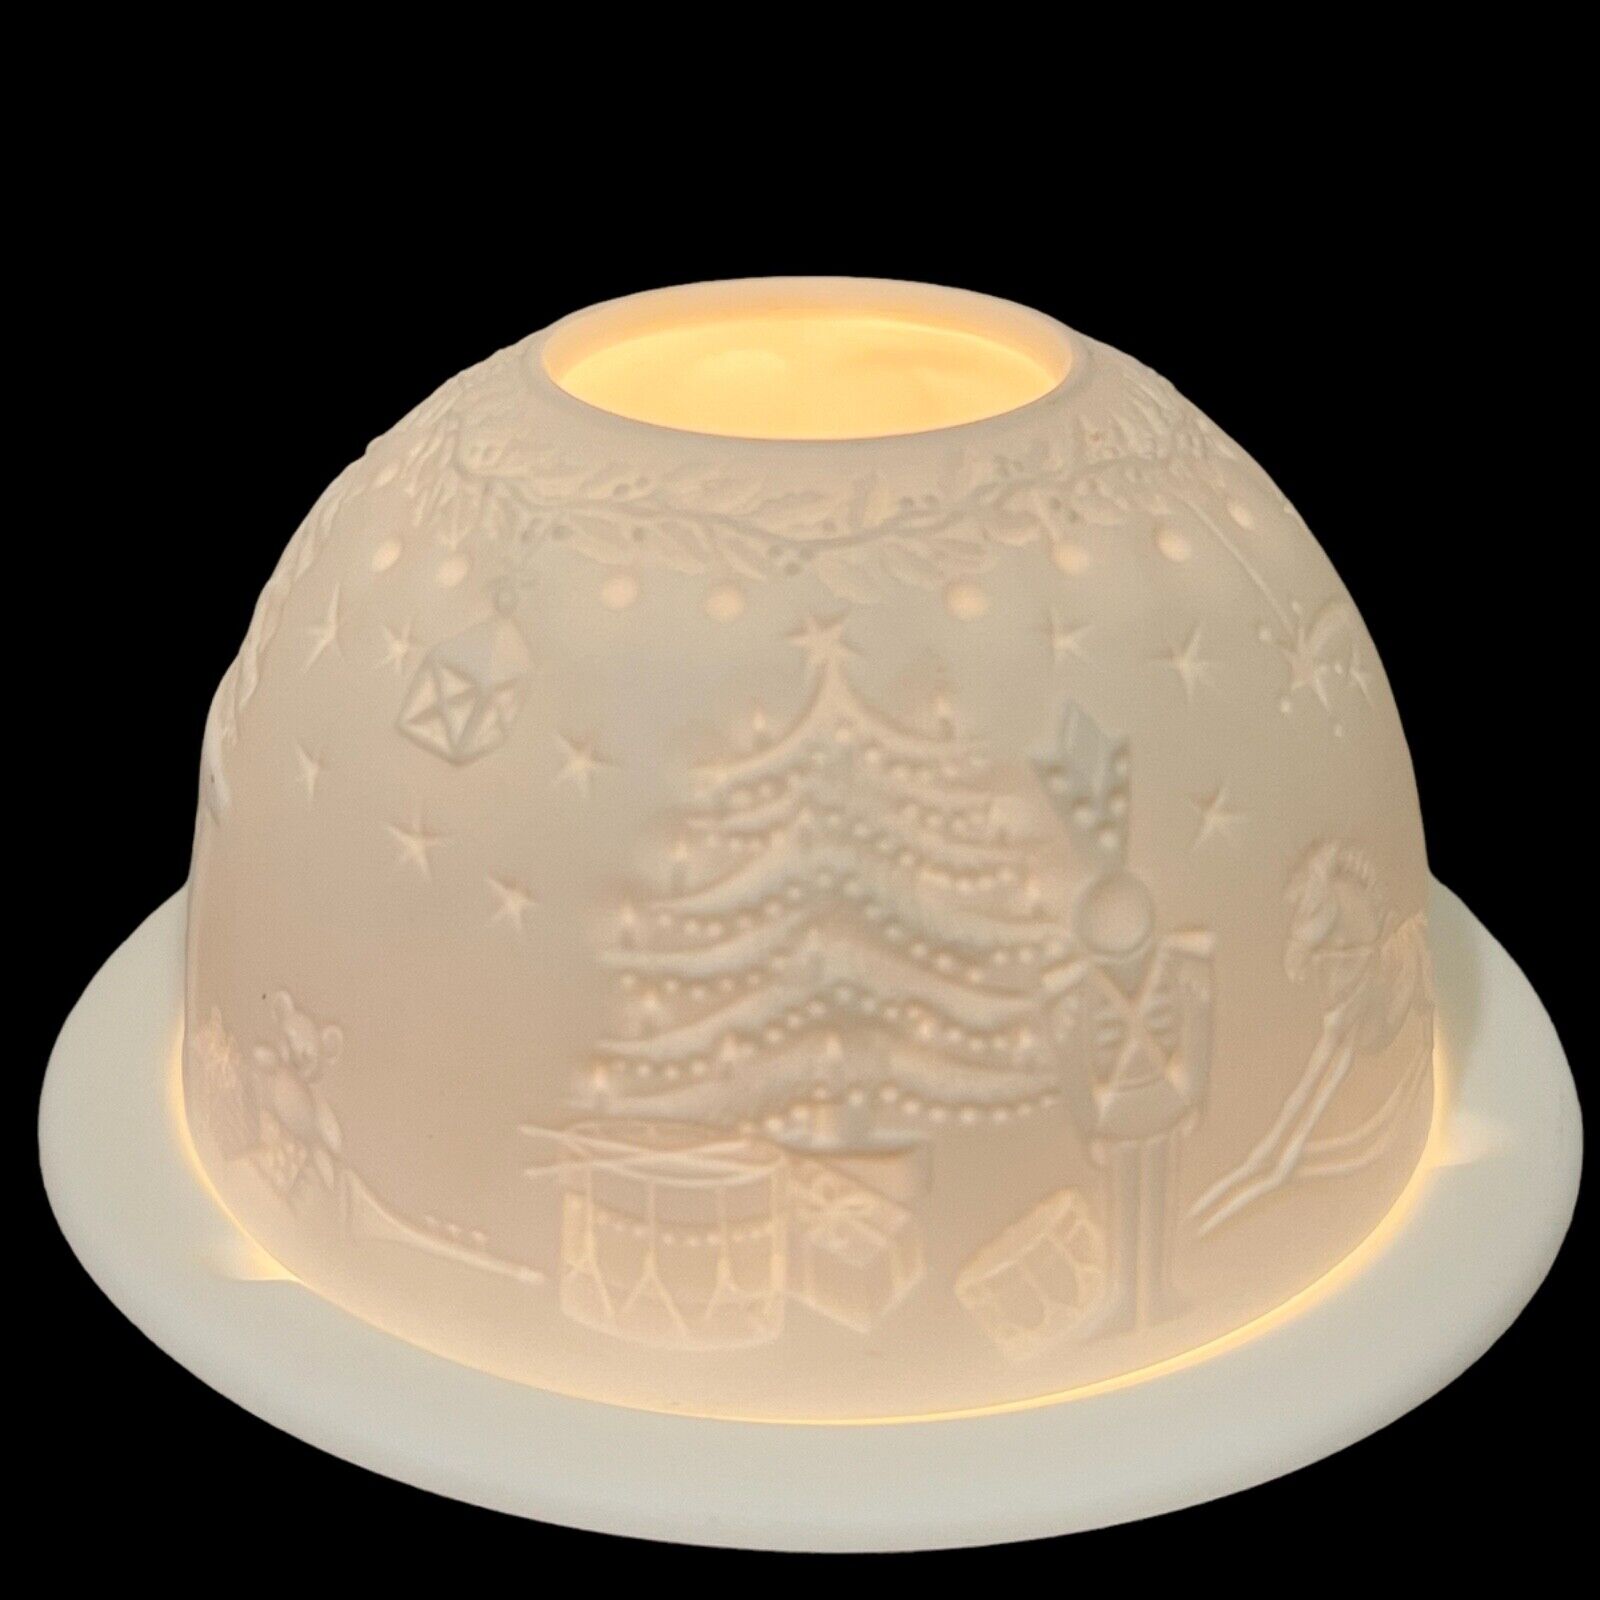 Bernardaud Lithophane Candle Votive Holder Grenadiers - 4249579 Bisque Porcelain